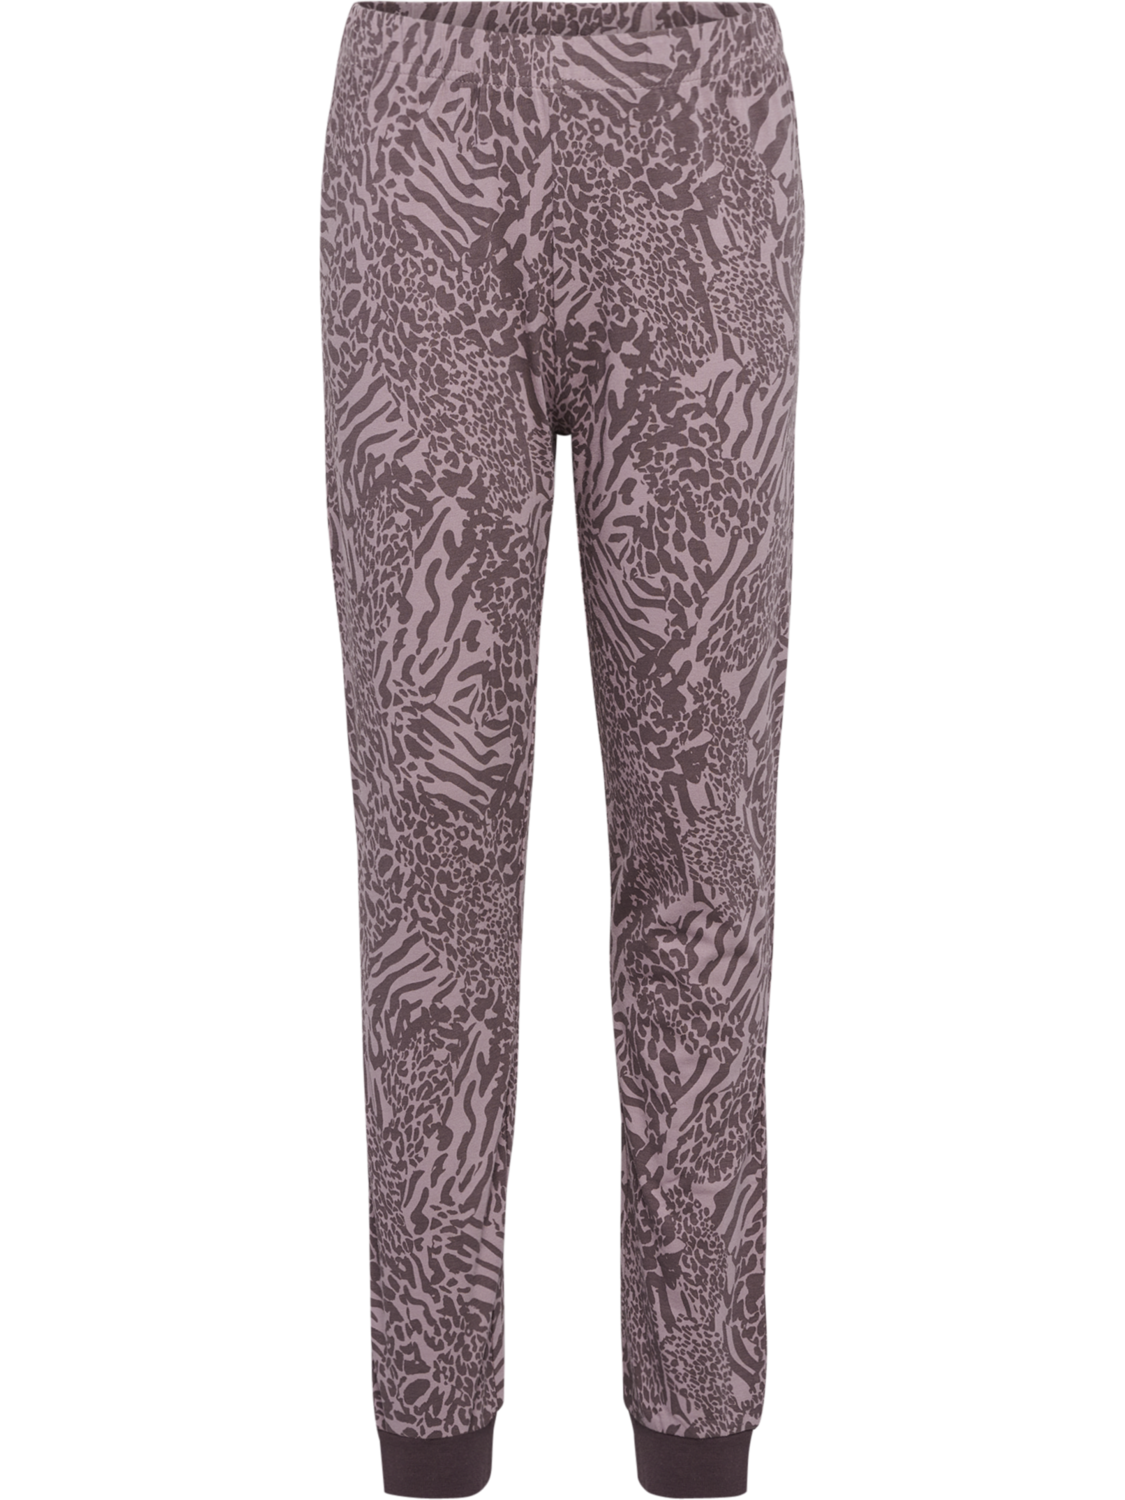 Leopard Printed Grey And Black Pyjama Night Suit